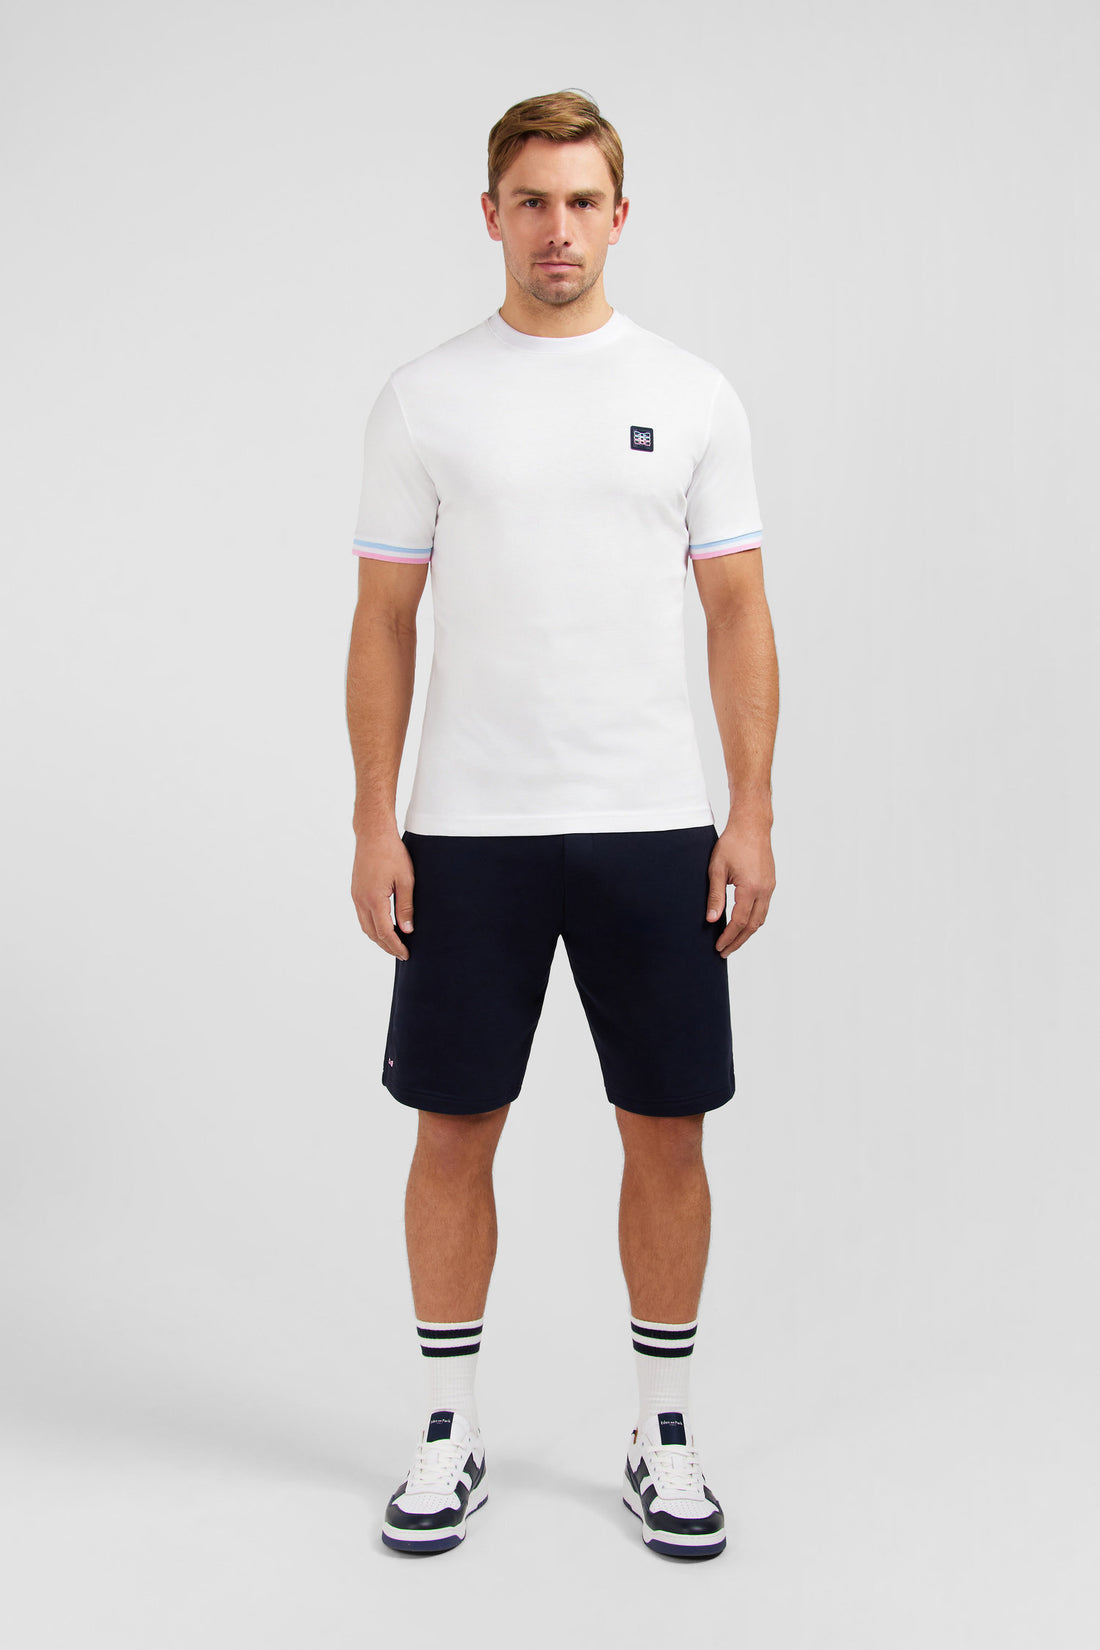 White Short-Sleeved T-Shirt With Embossed Logo_E24MAITC0043_BC_01